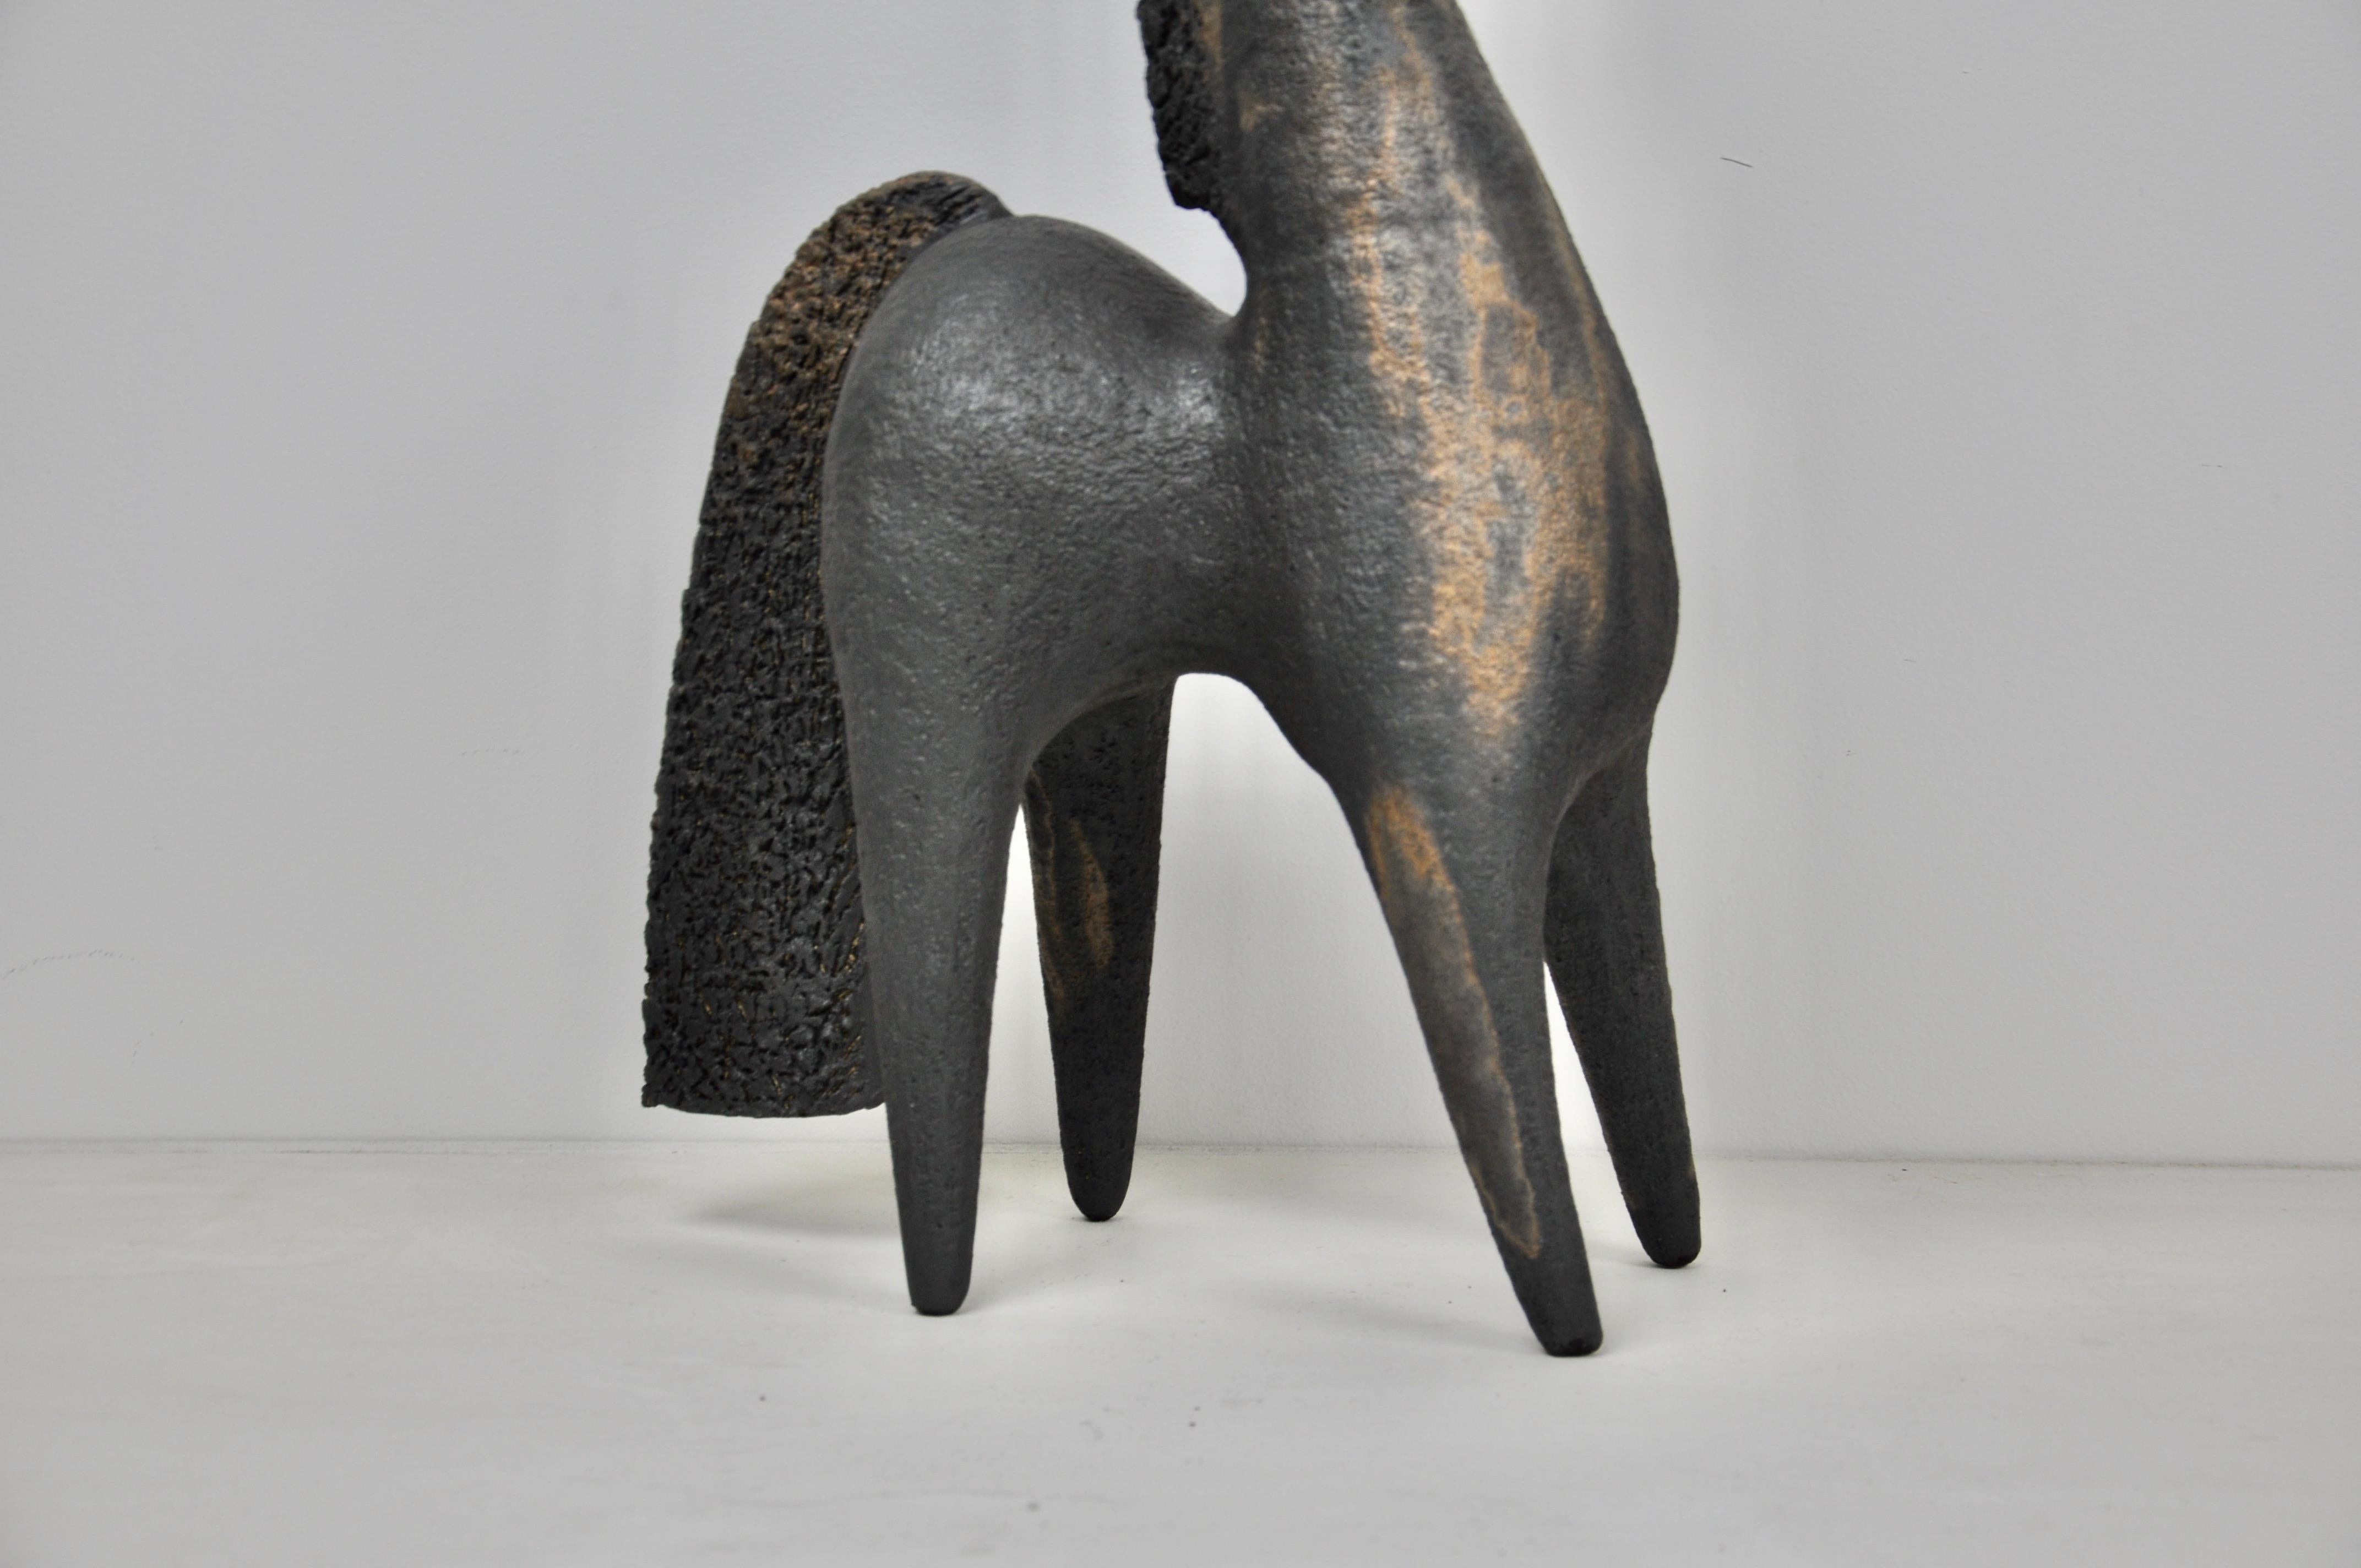 French Unicorn by Dominique Pouchain